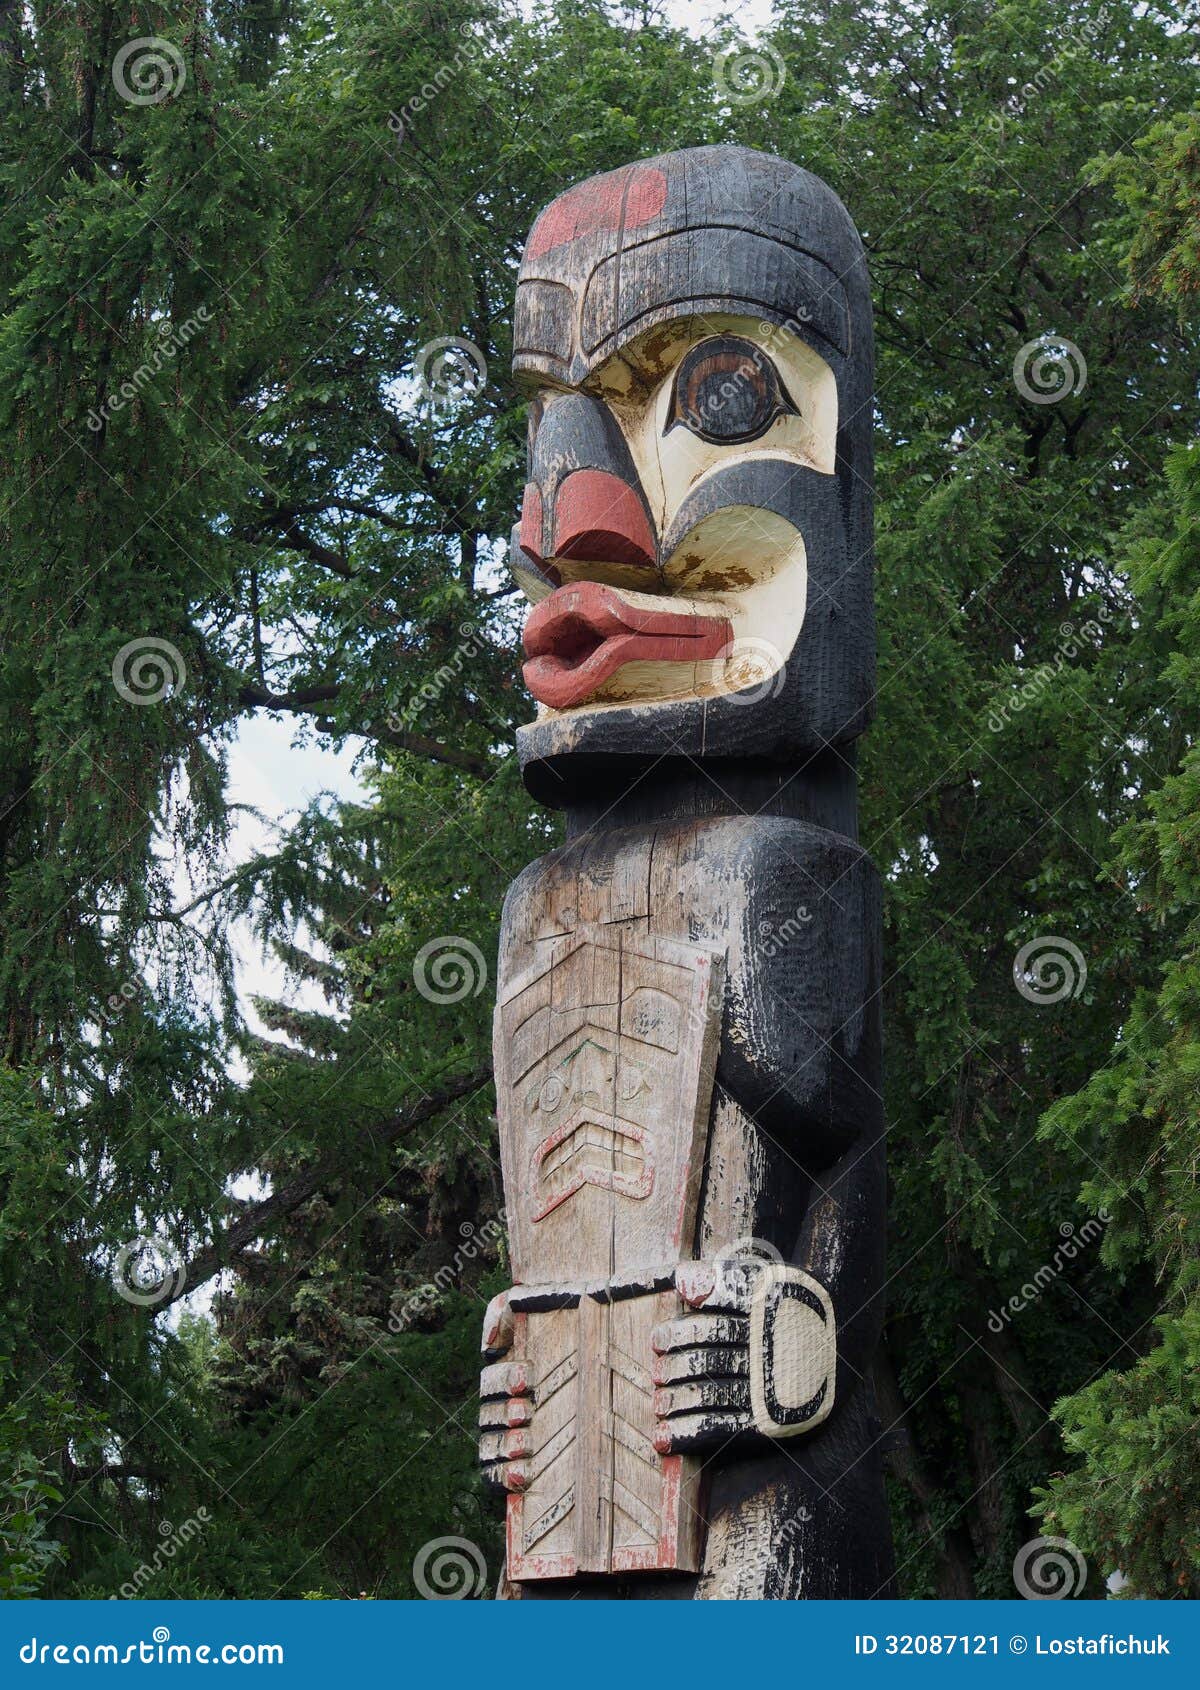 Haida Totem Pole Royalty-Free Stock Photography | CartoonDealer.com ...